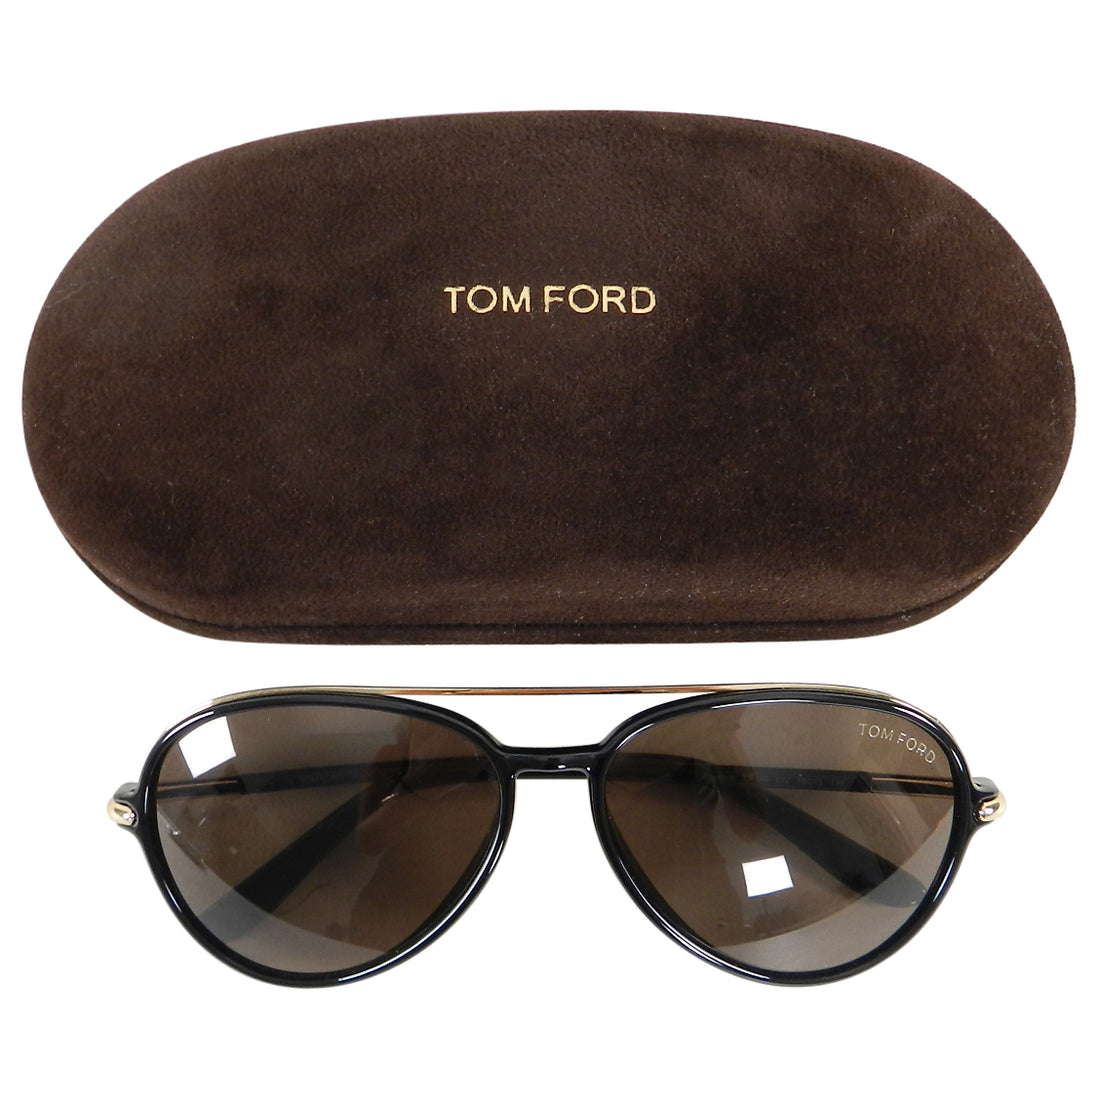 Tom Ford RF149 Ramone Black Frame Aviator Sunglasses with Gold Trim